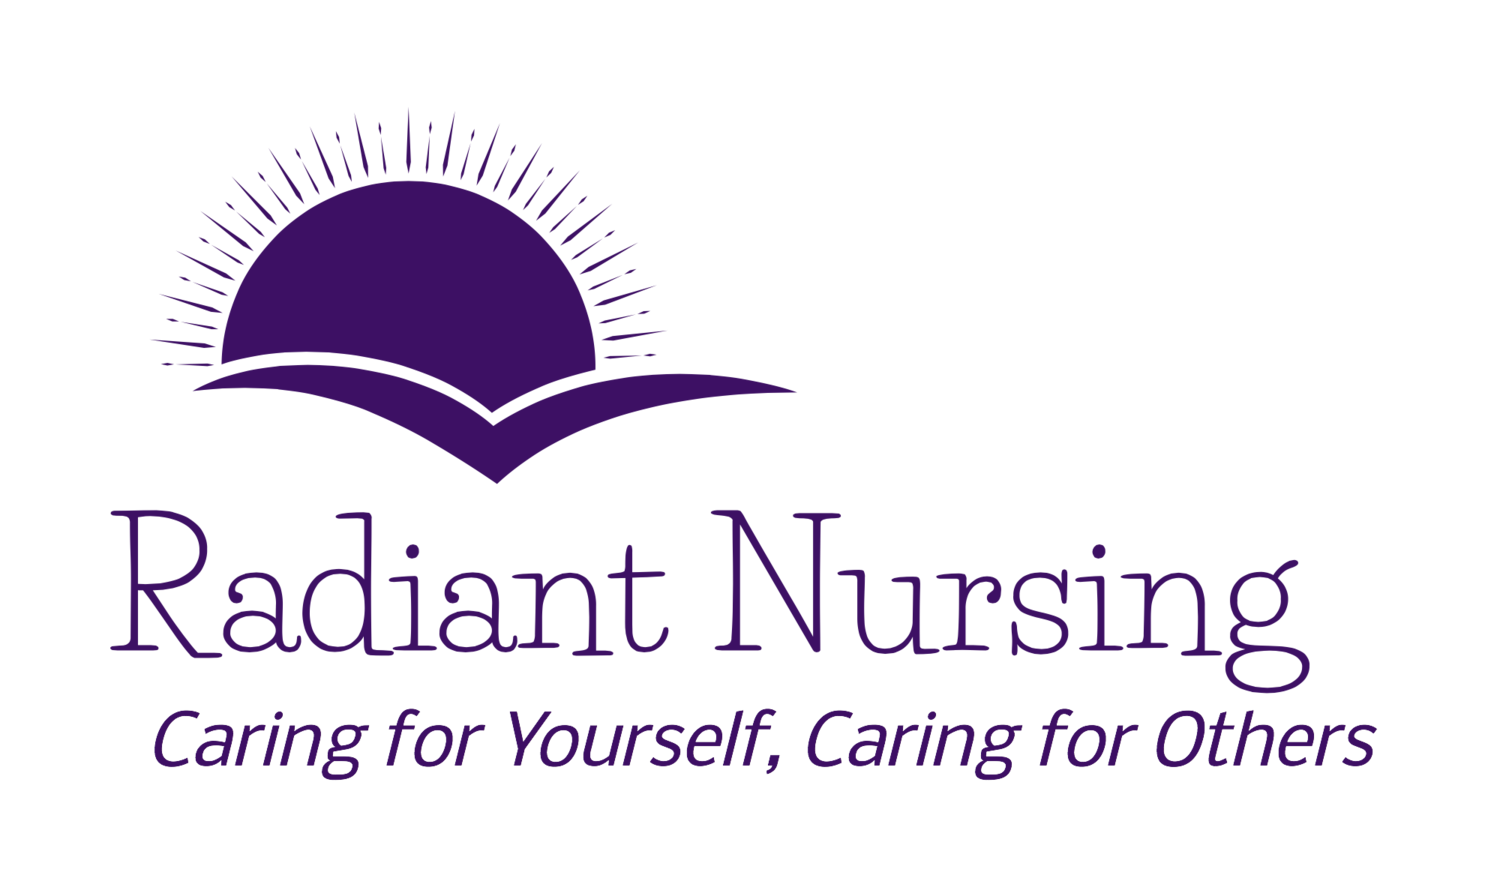 Radiant Nursing